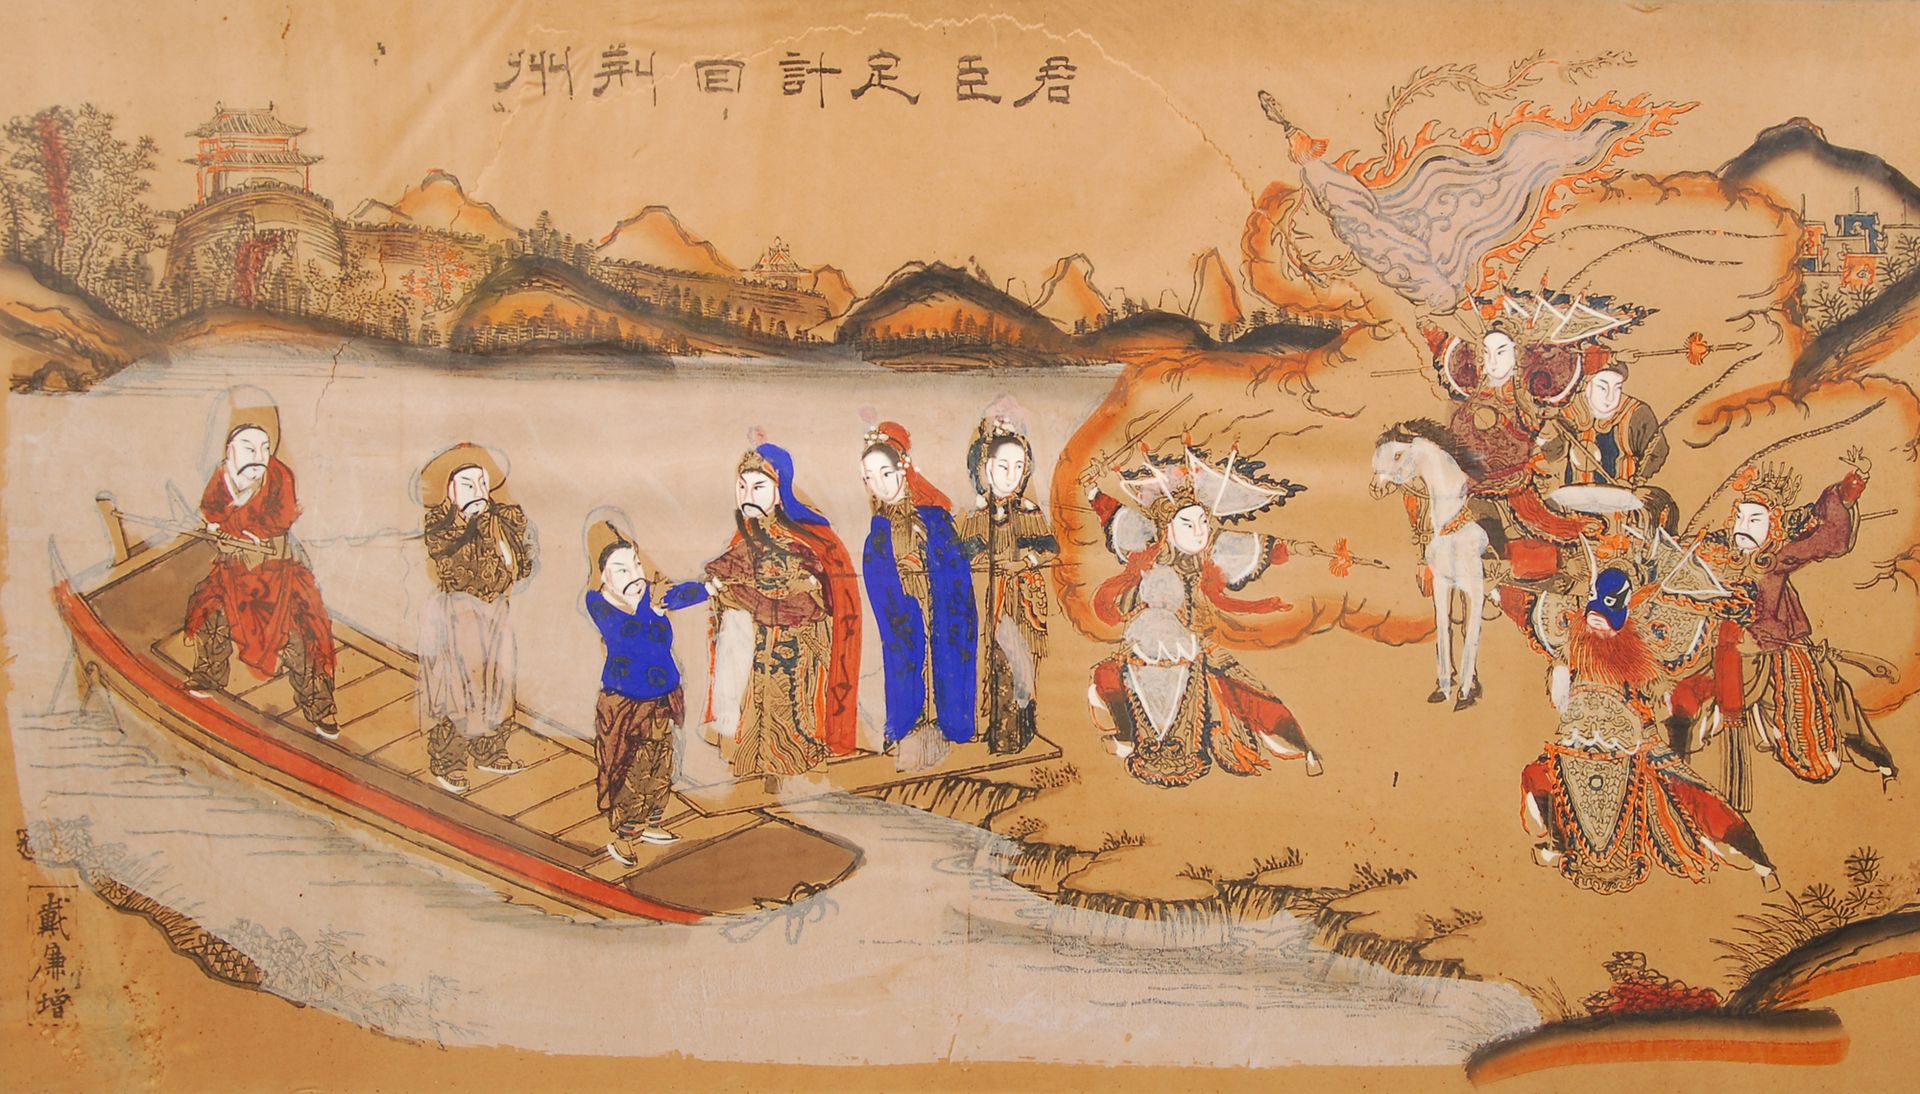 Null 日本学校
穿越河流的贵族们。
加强版画。
61 x 107厘米。